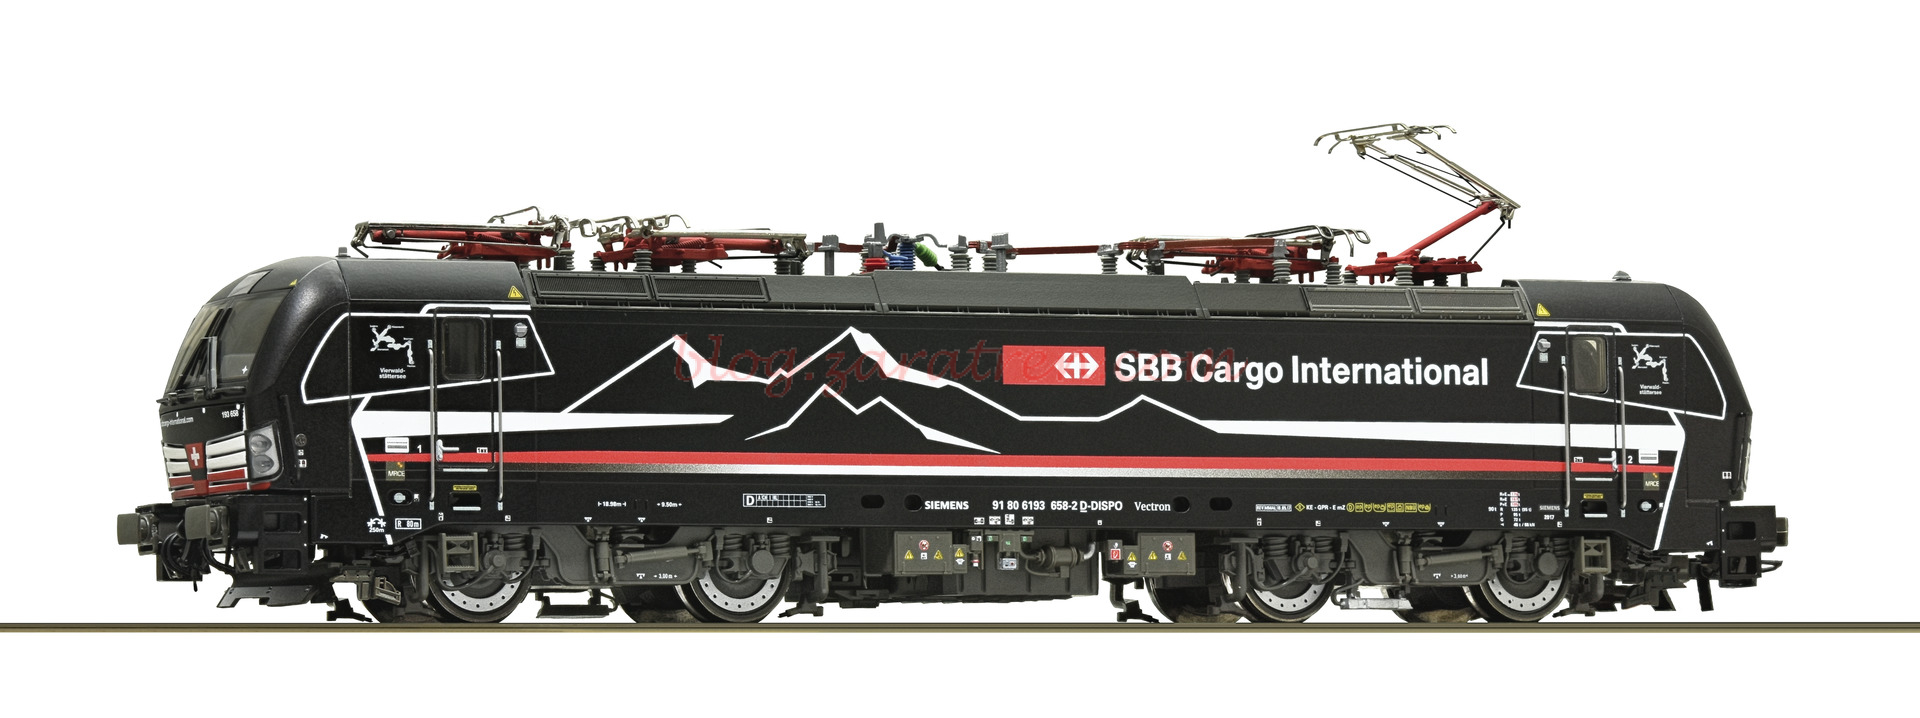 Roco – Maquina electrica SBB Cargo International 193 658-2, D.Sonido, Escala H0, Ref: 70727